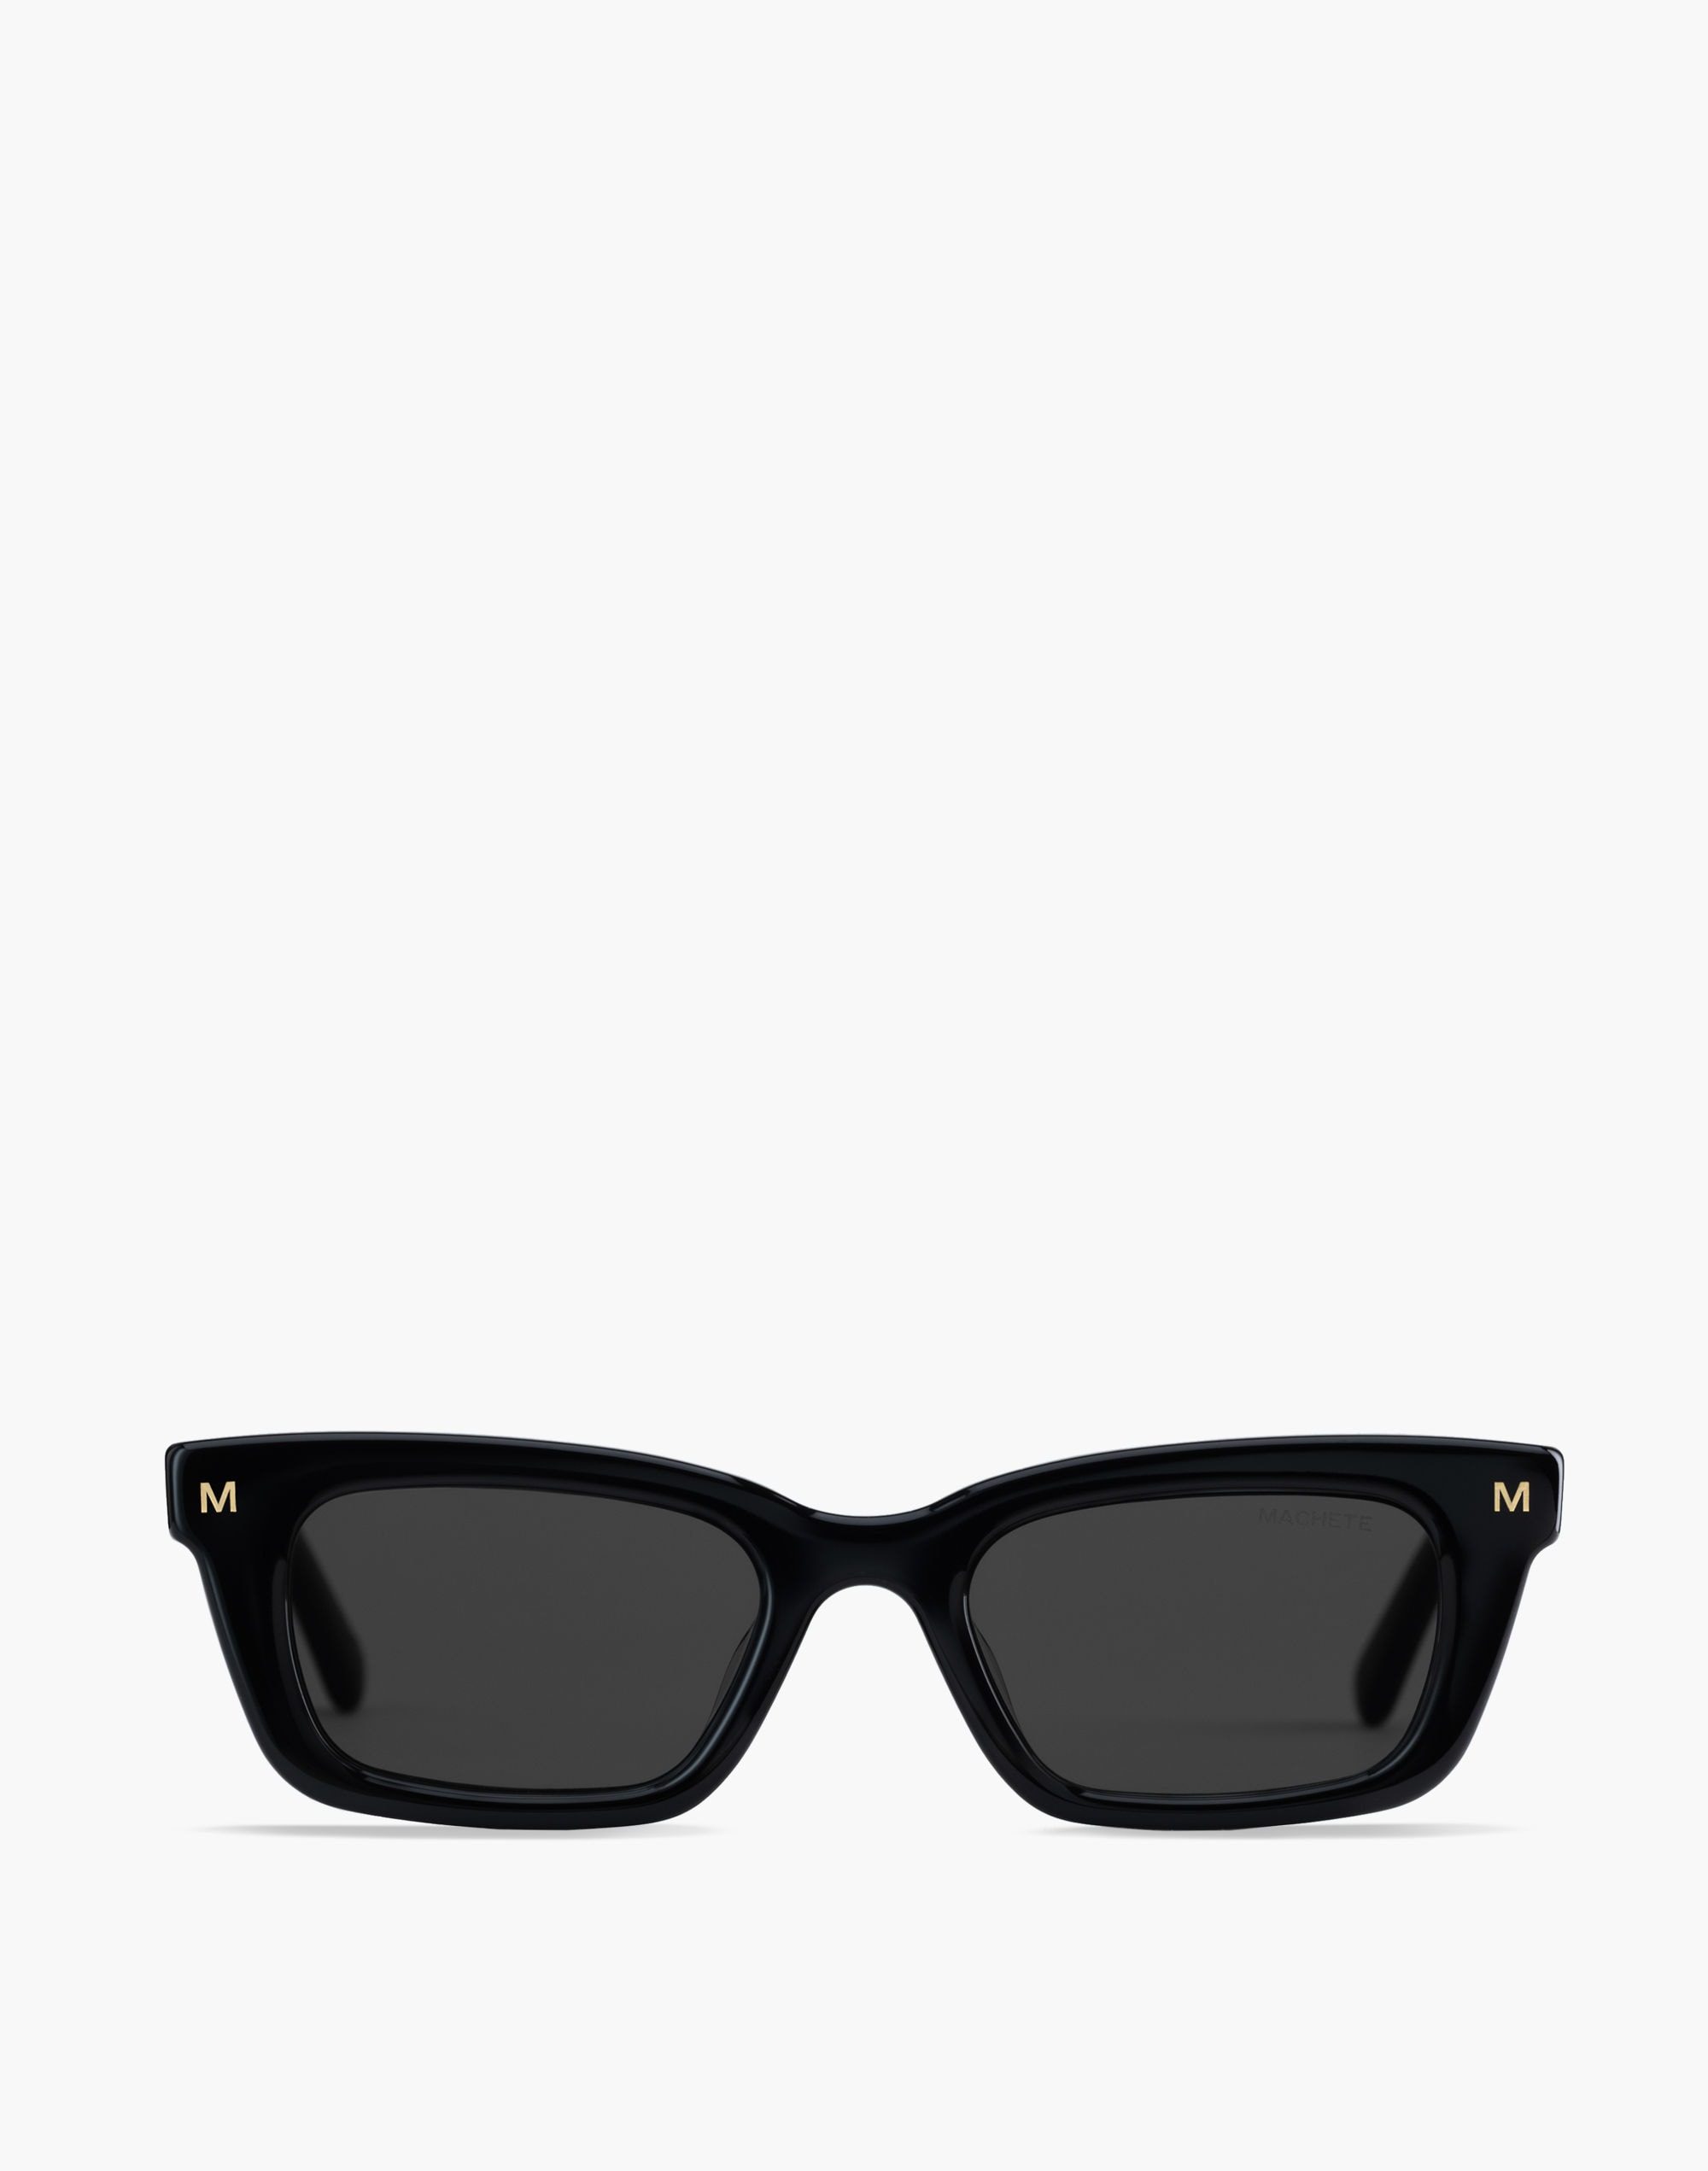 Mw Machete Ruby Sunglasses In Black